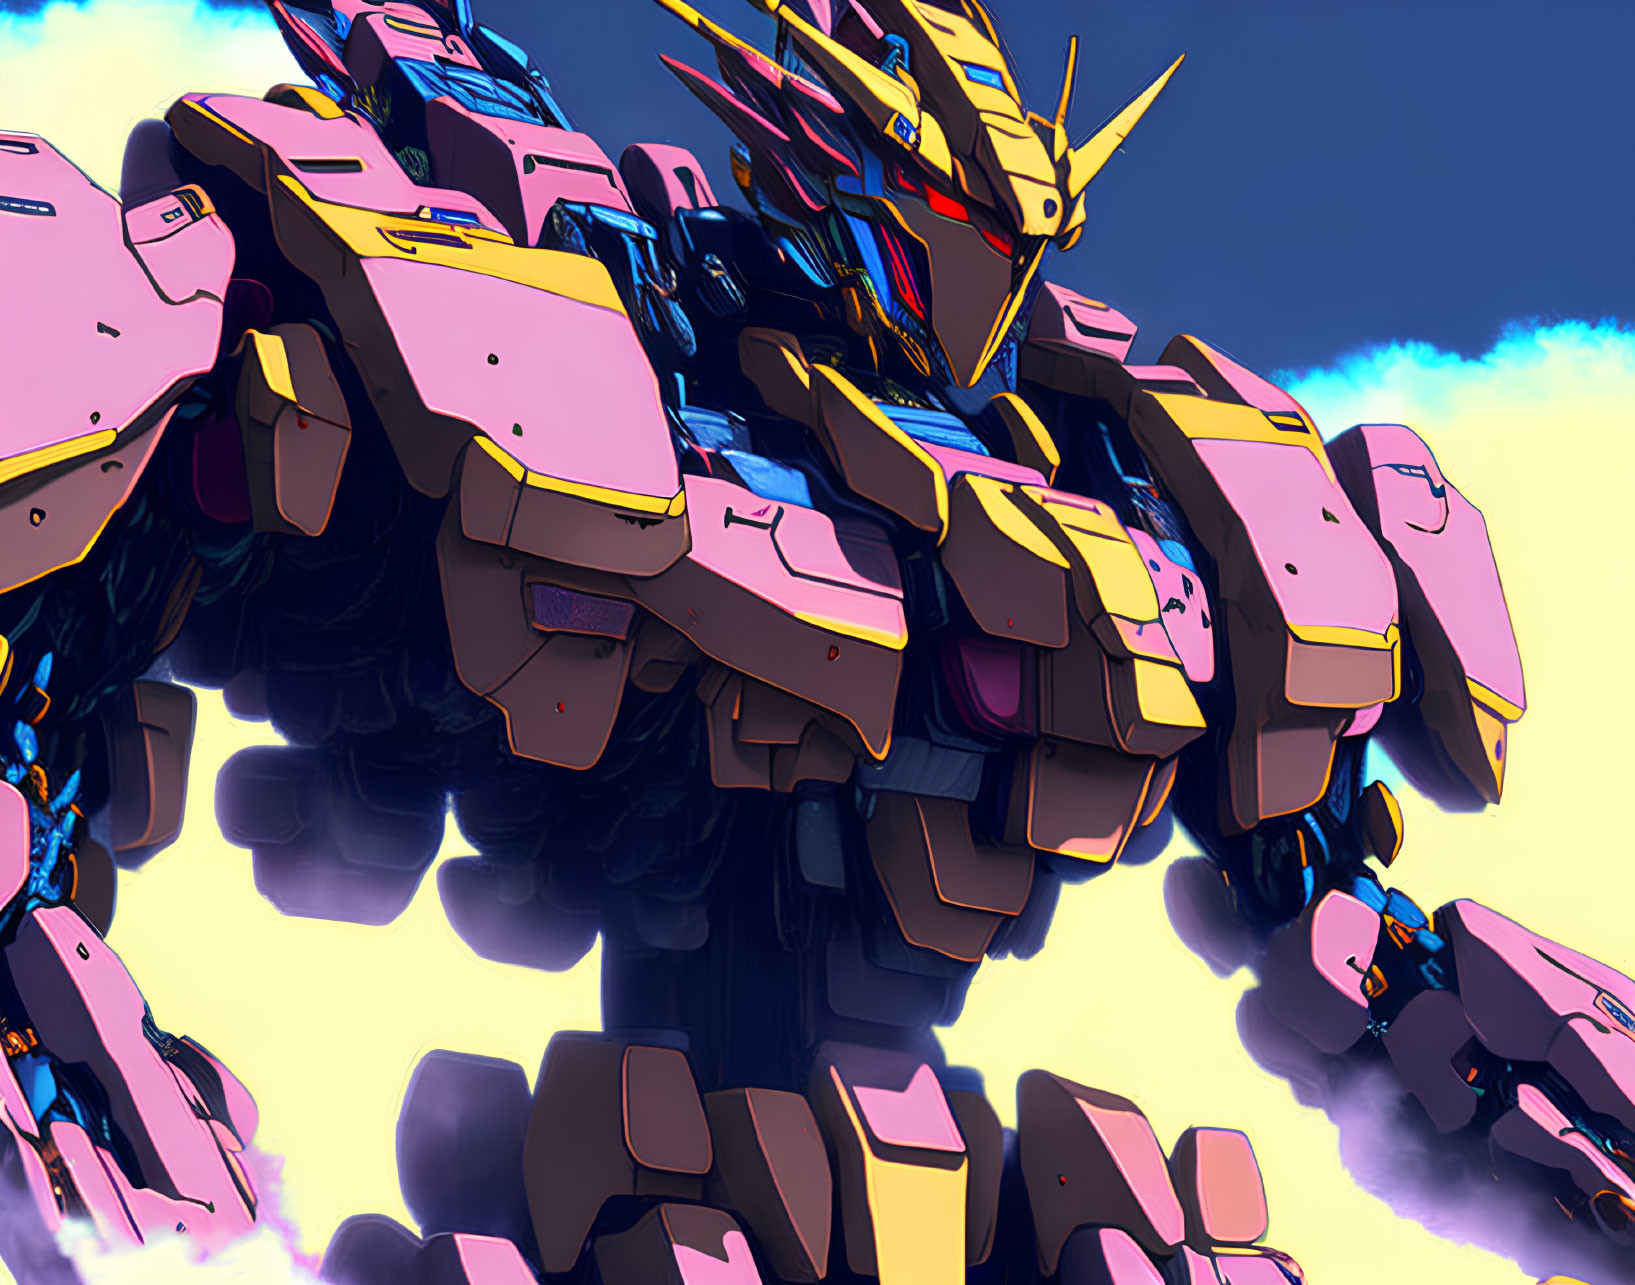 Detailed Multicolored Mecha Robot Illustration on Sky Blue Background